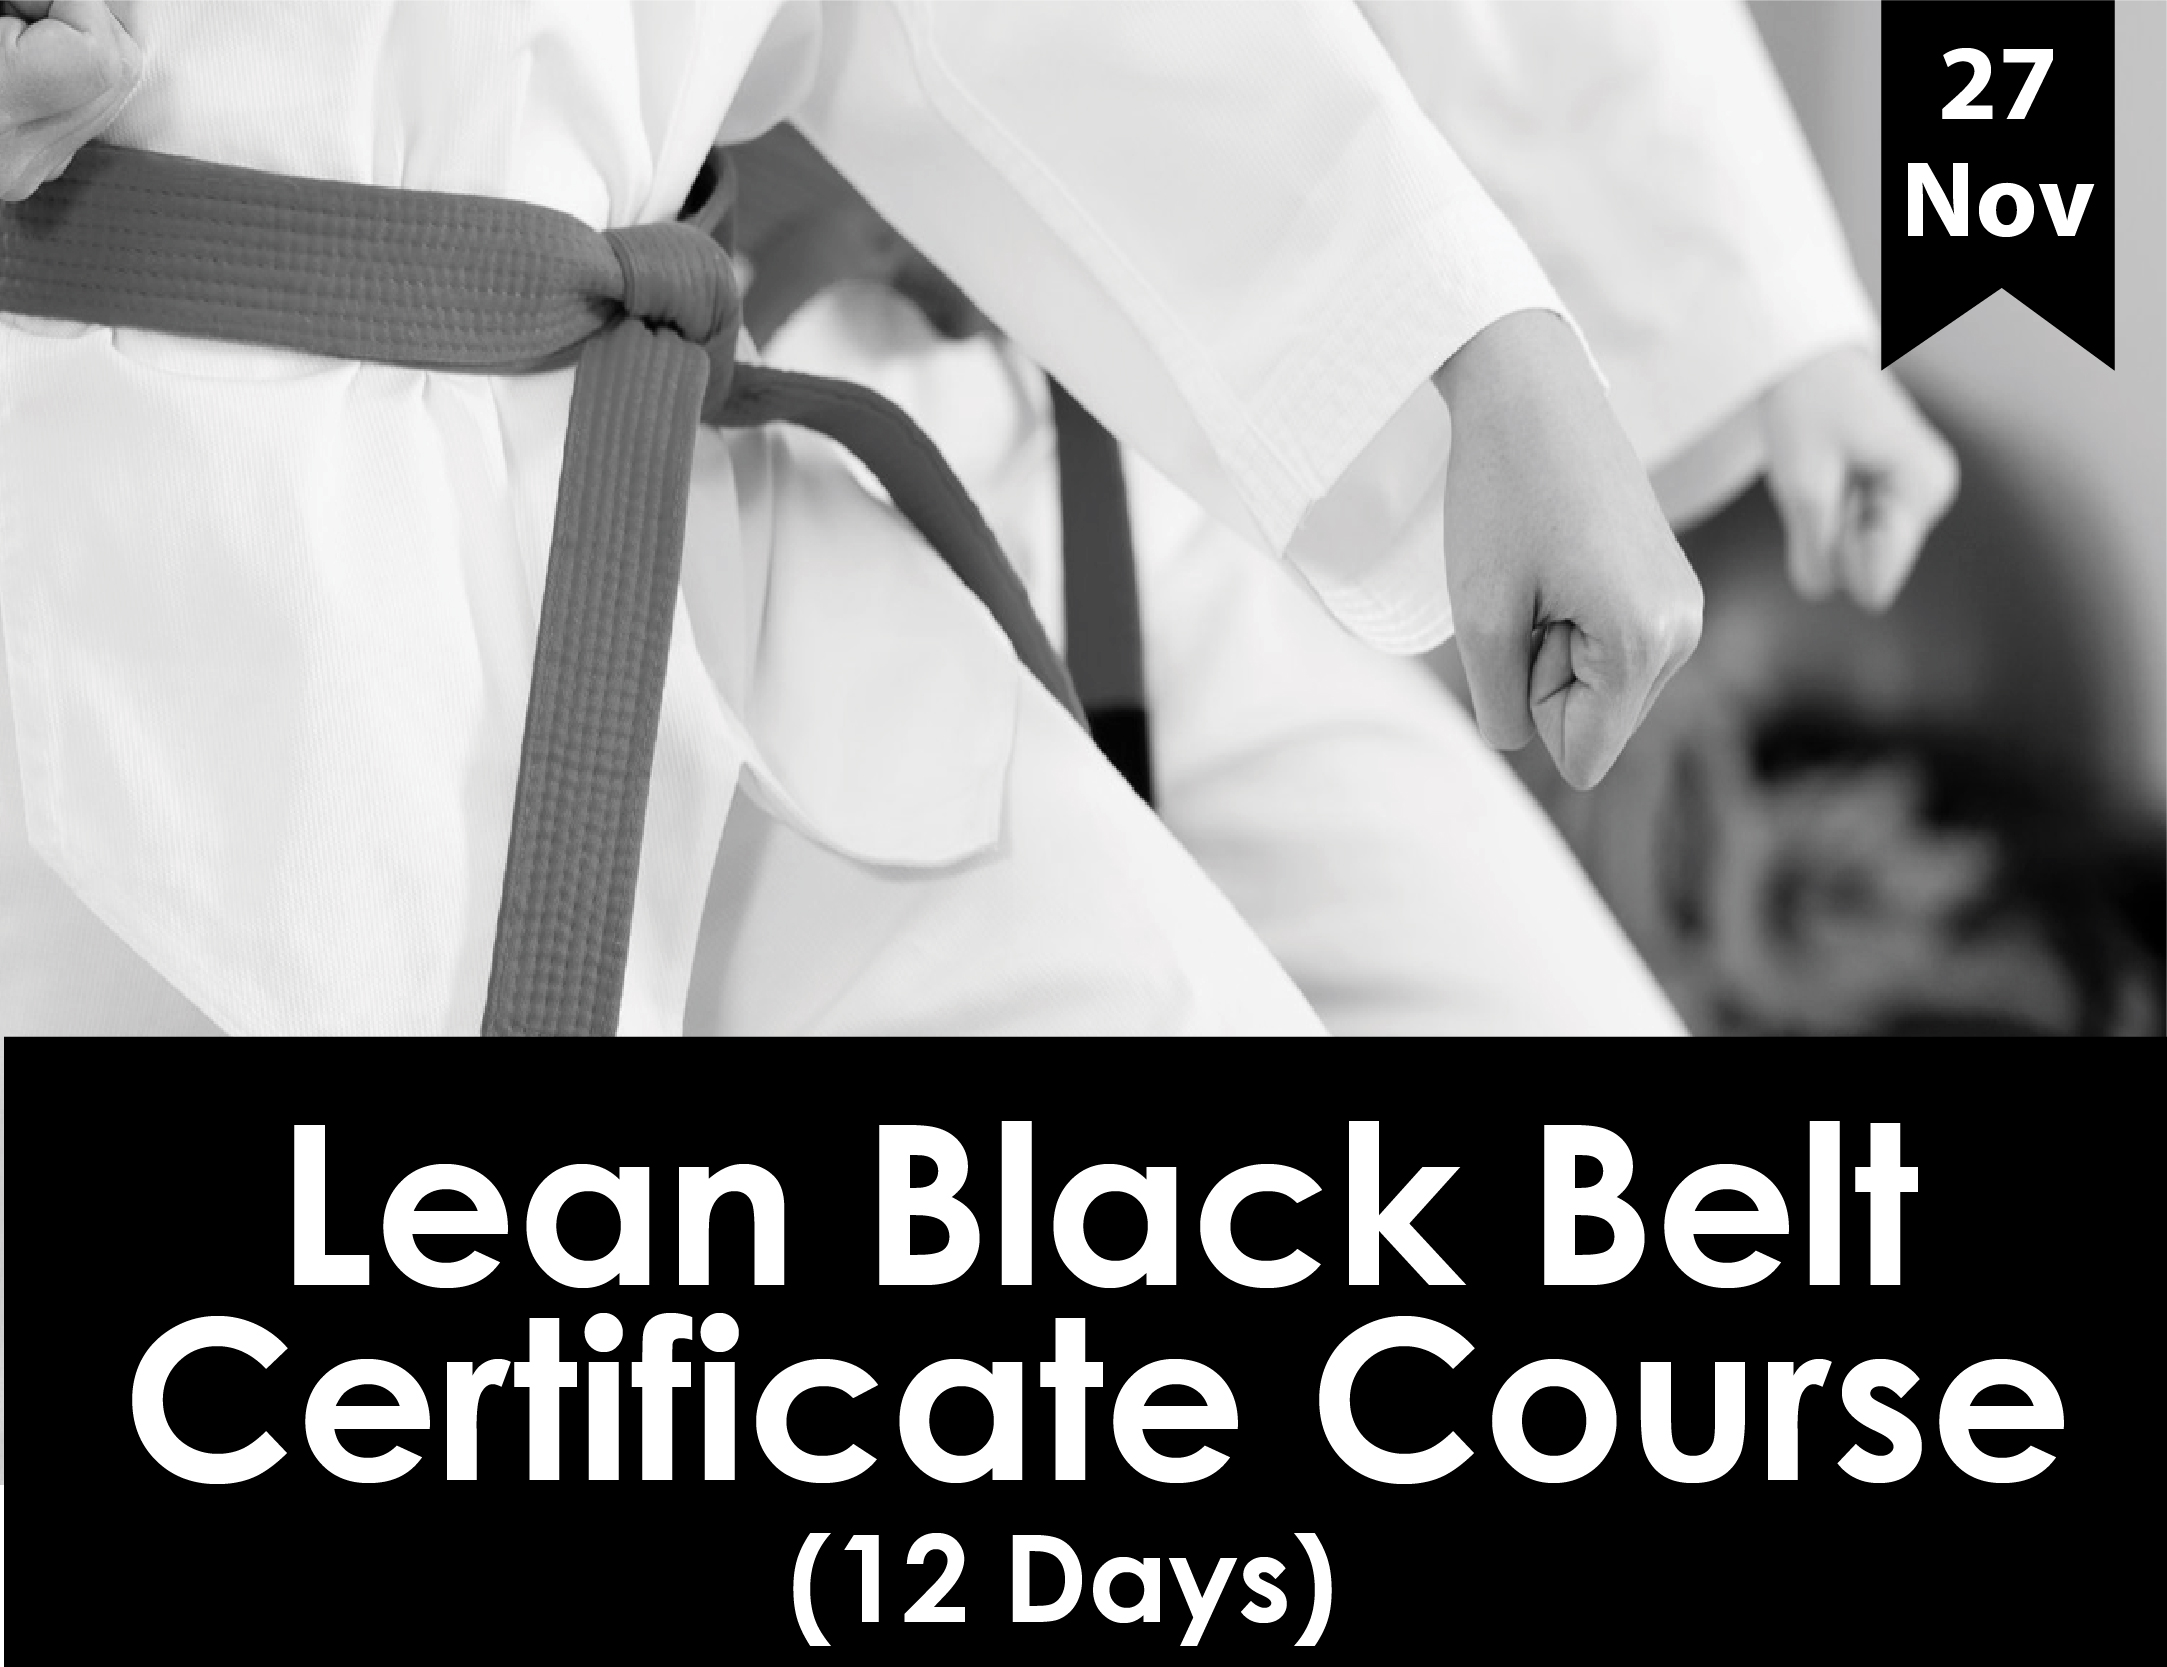 Lean Black Belt Certificate Course